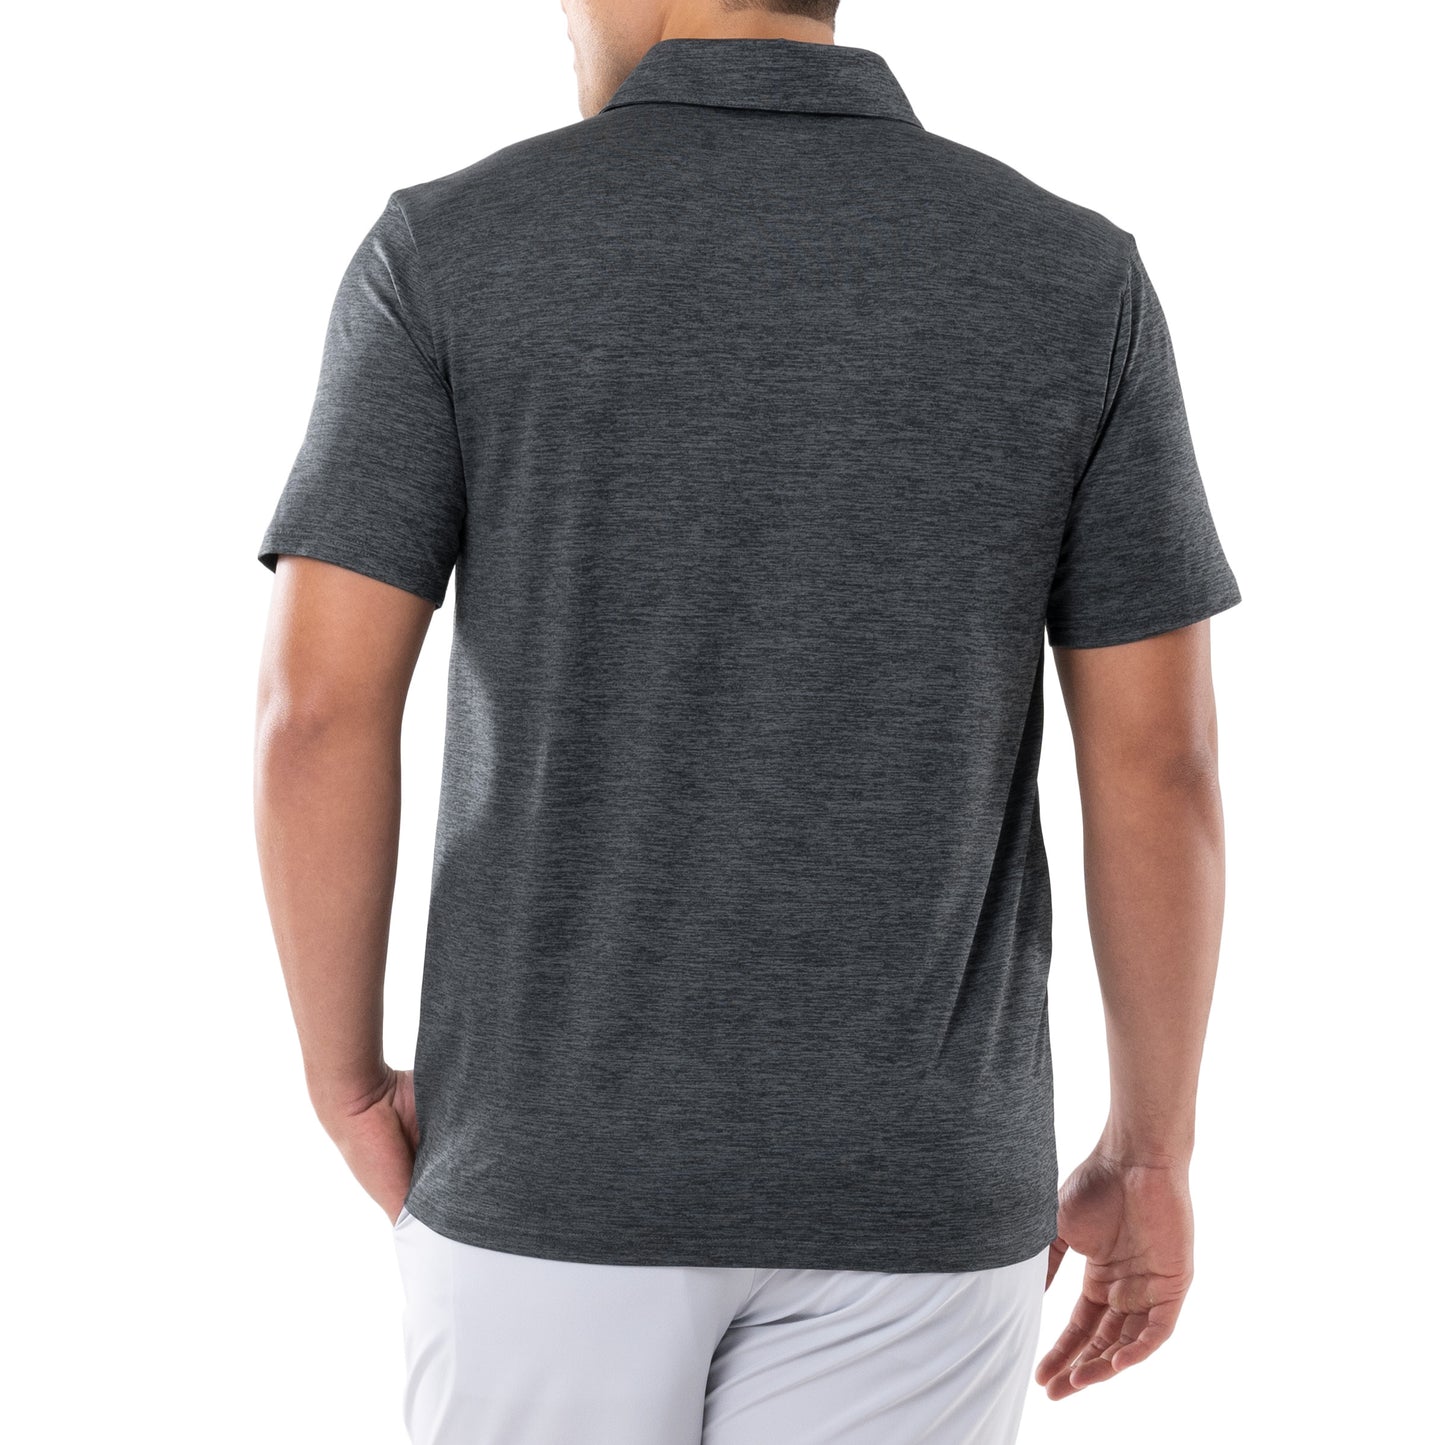 Men's Short Sleeve Performance Polo Shirt